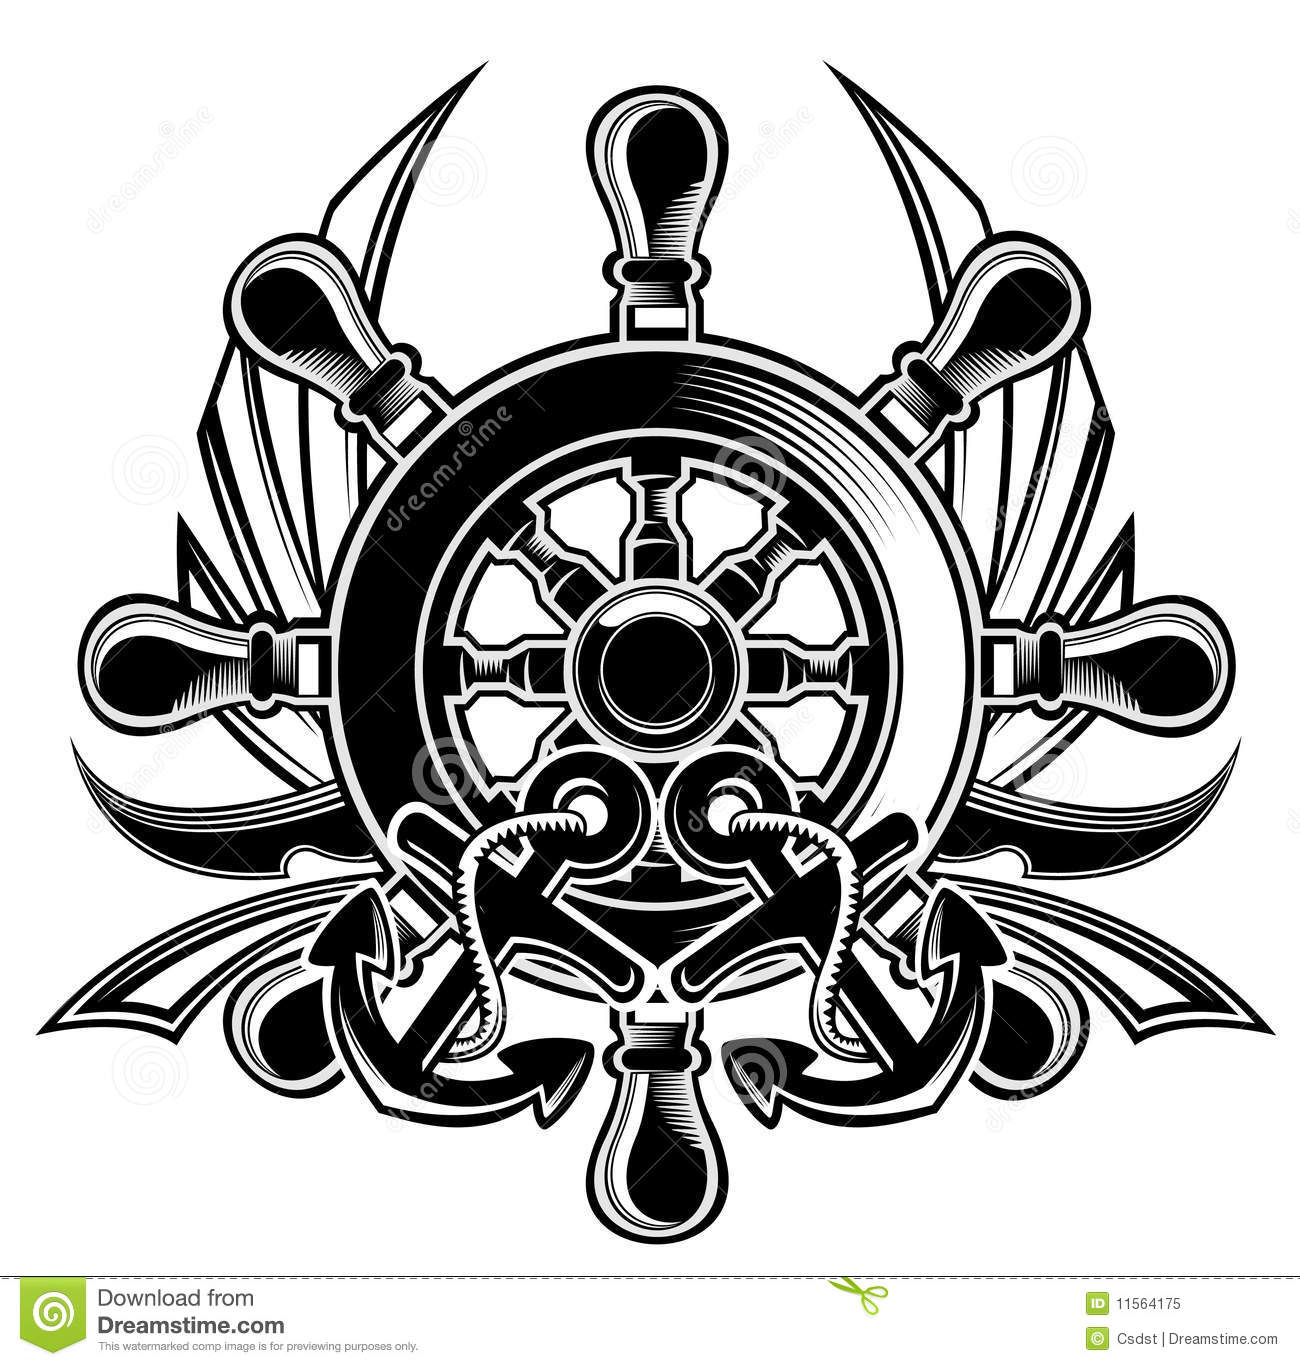 Ship Steering Wheel Shield Royalty Free Stock Photo   Image  11564175